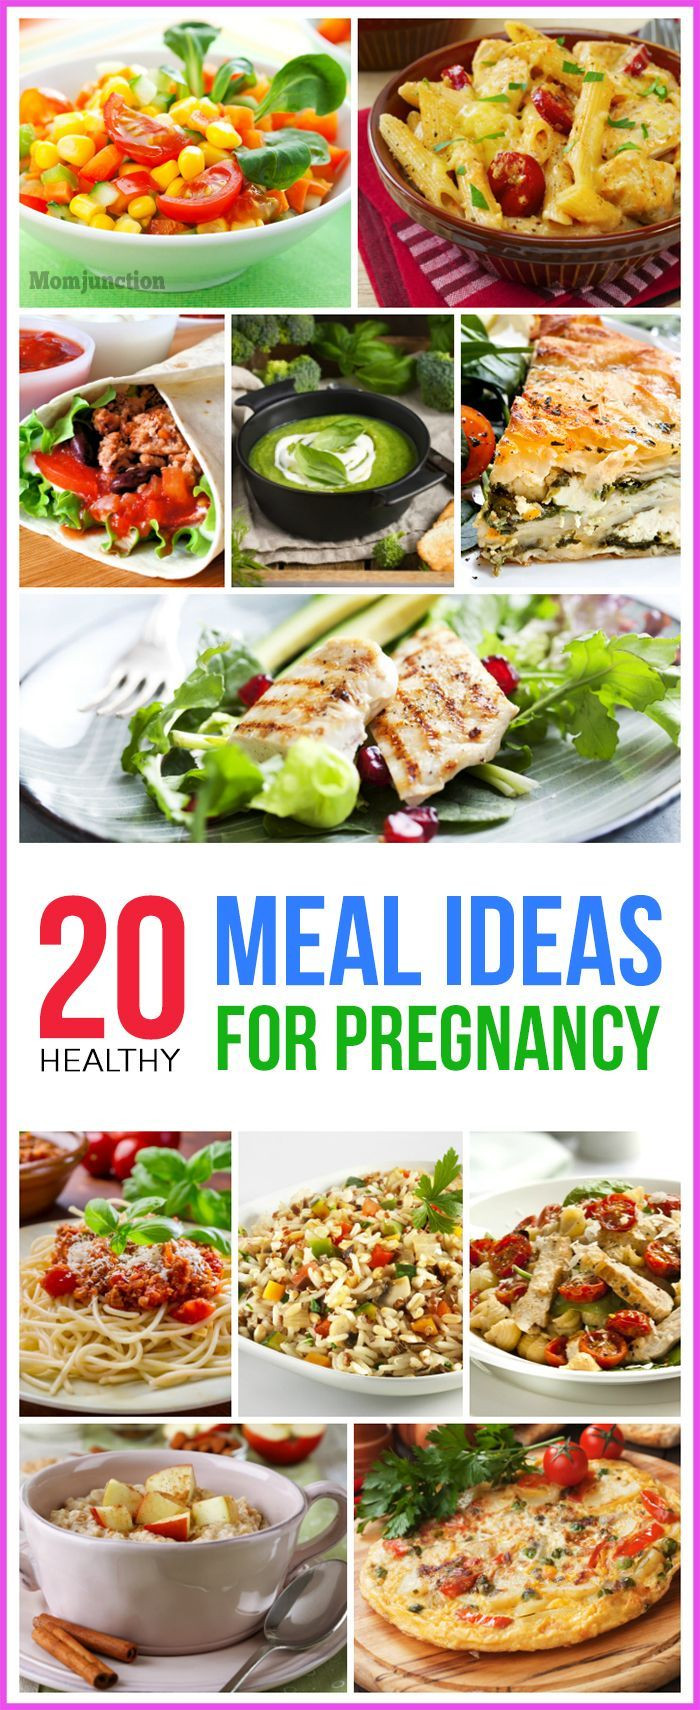 Healthy Pregnancy Dinner Recipes
 Best 25 Happy healthy ideas on Pinterest